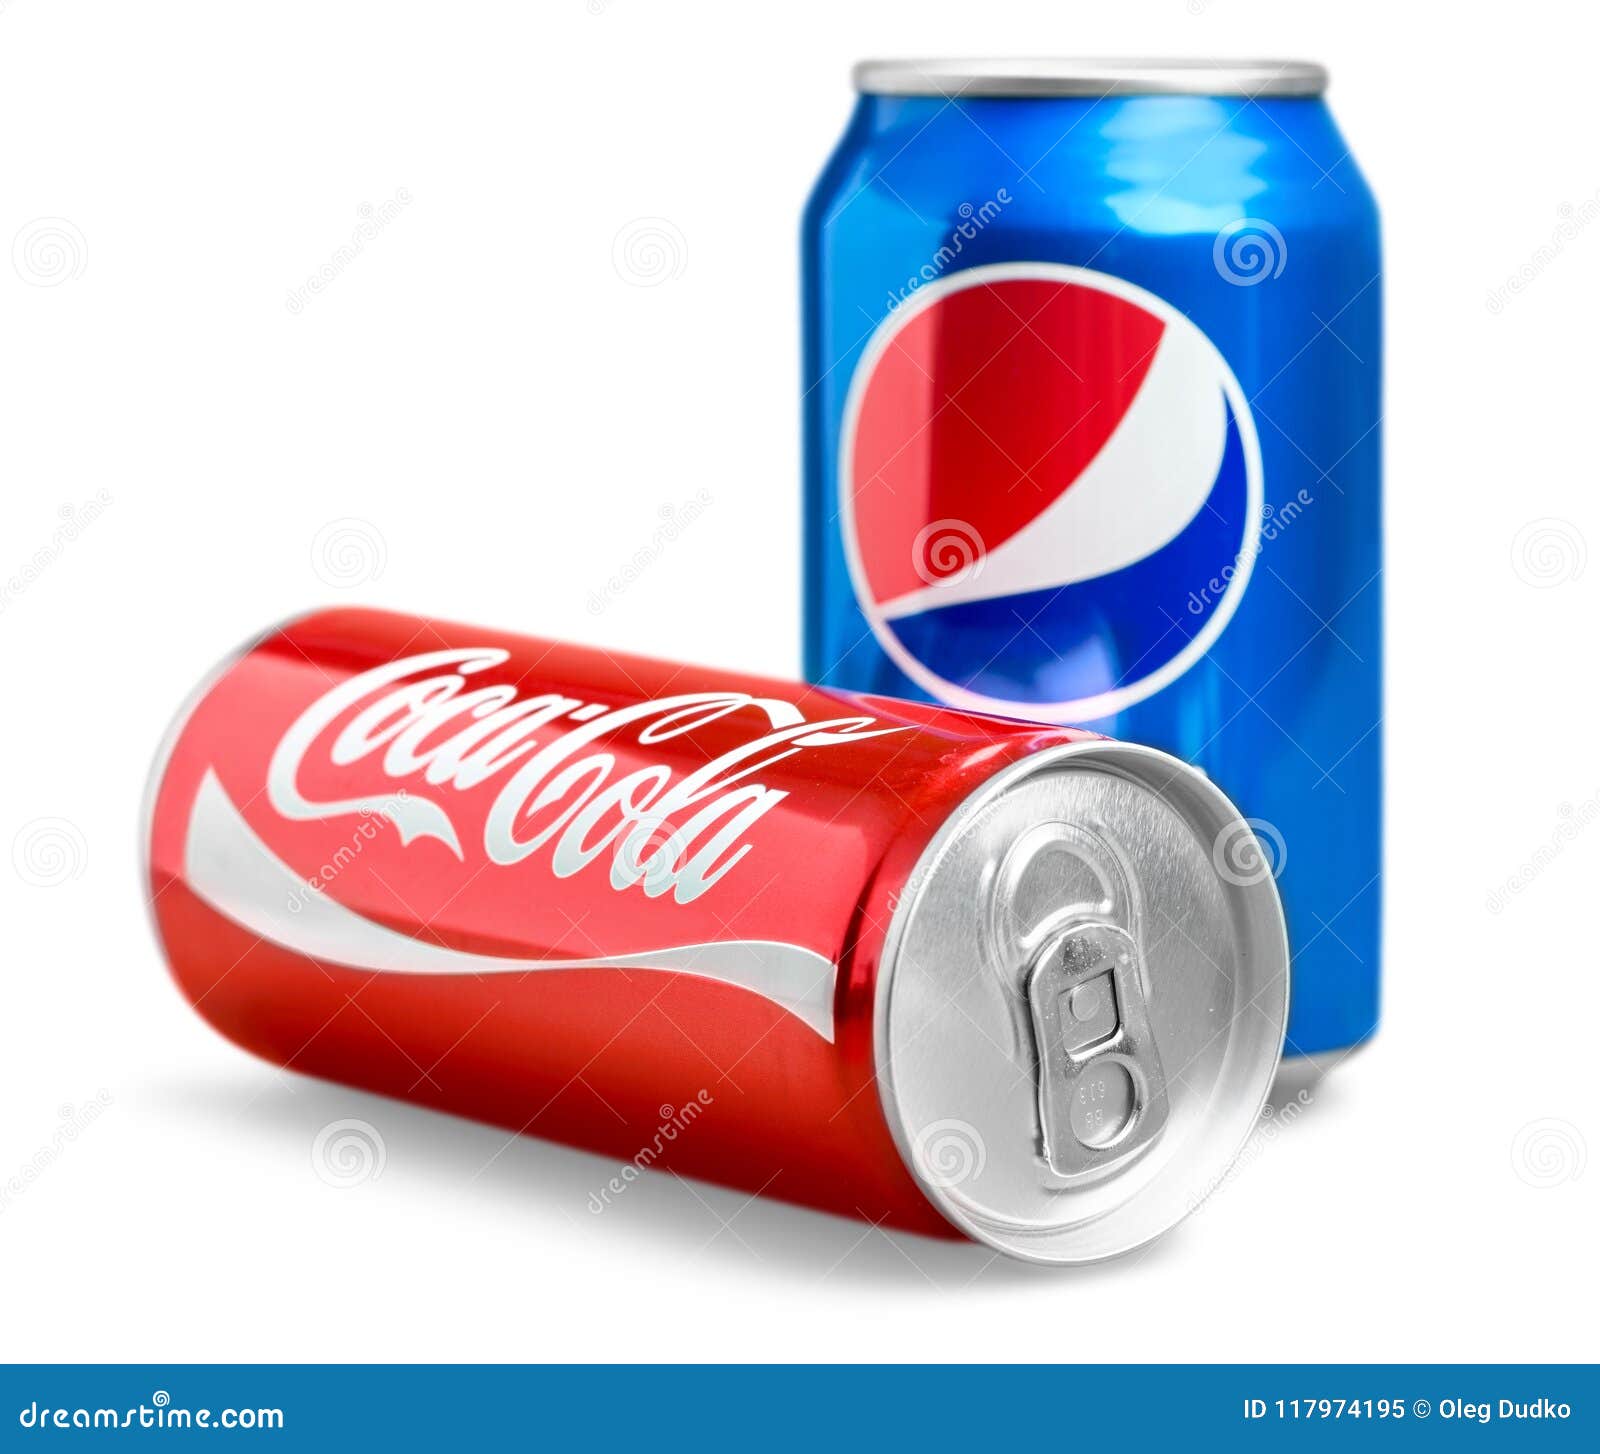 Photo of a Coca-Cola and Pepsi 330 Ml Cans. Coca Editorial Image ...